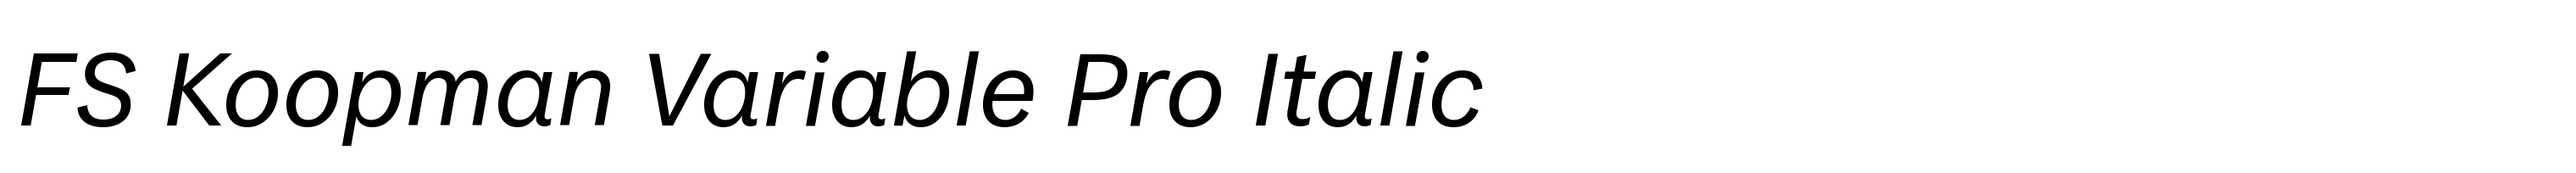 FS Koopman Variable Pro Italic